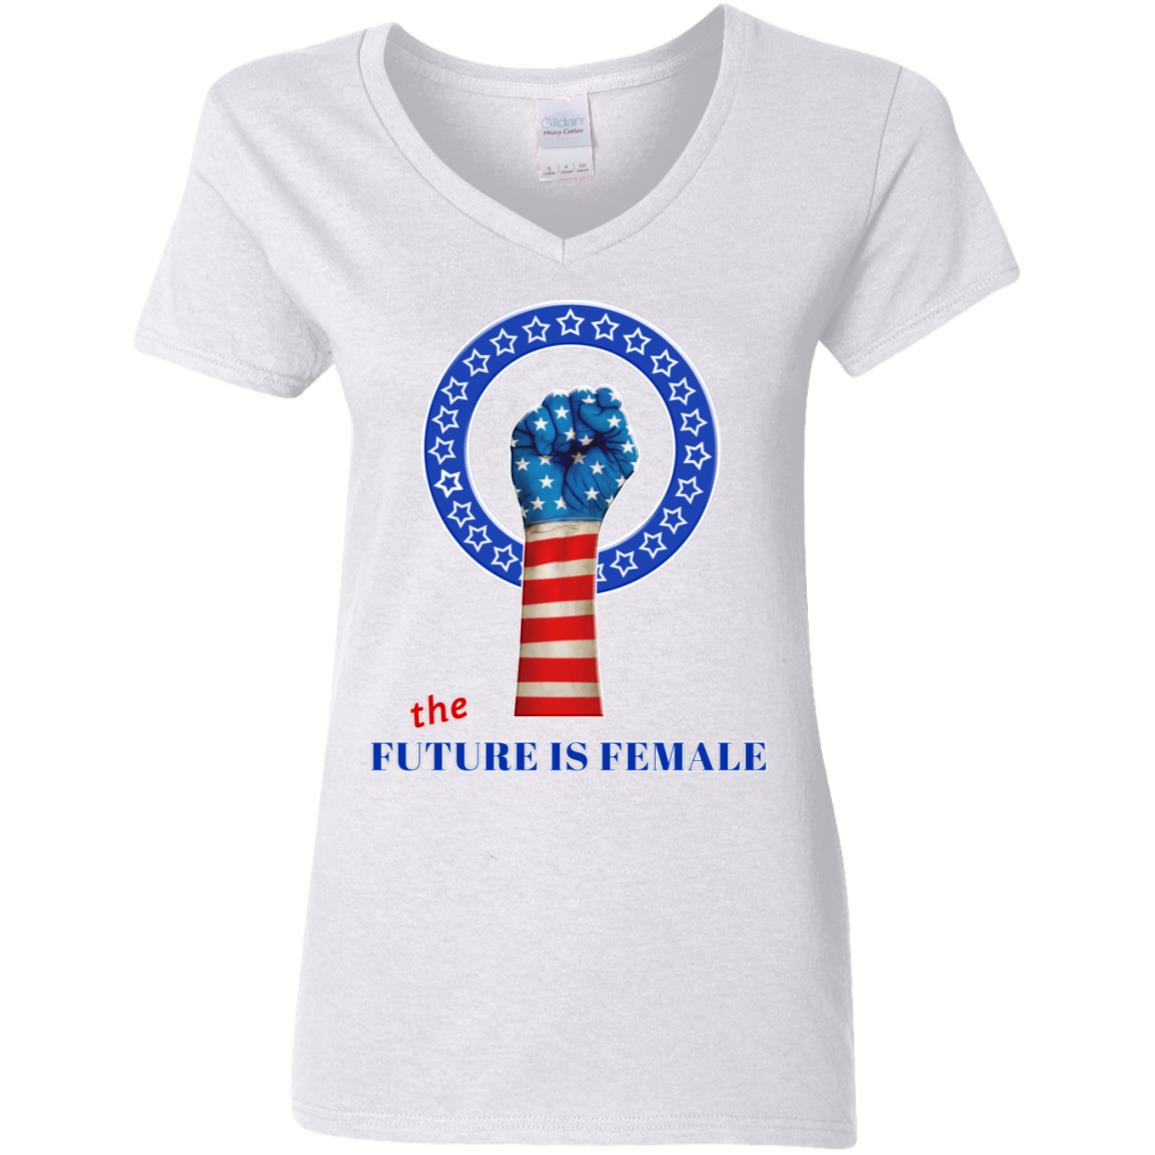 The Future Is Female - Women's V-Neck T Shirt